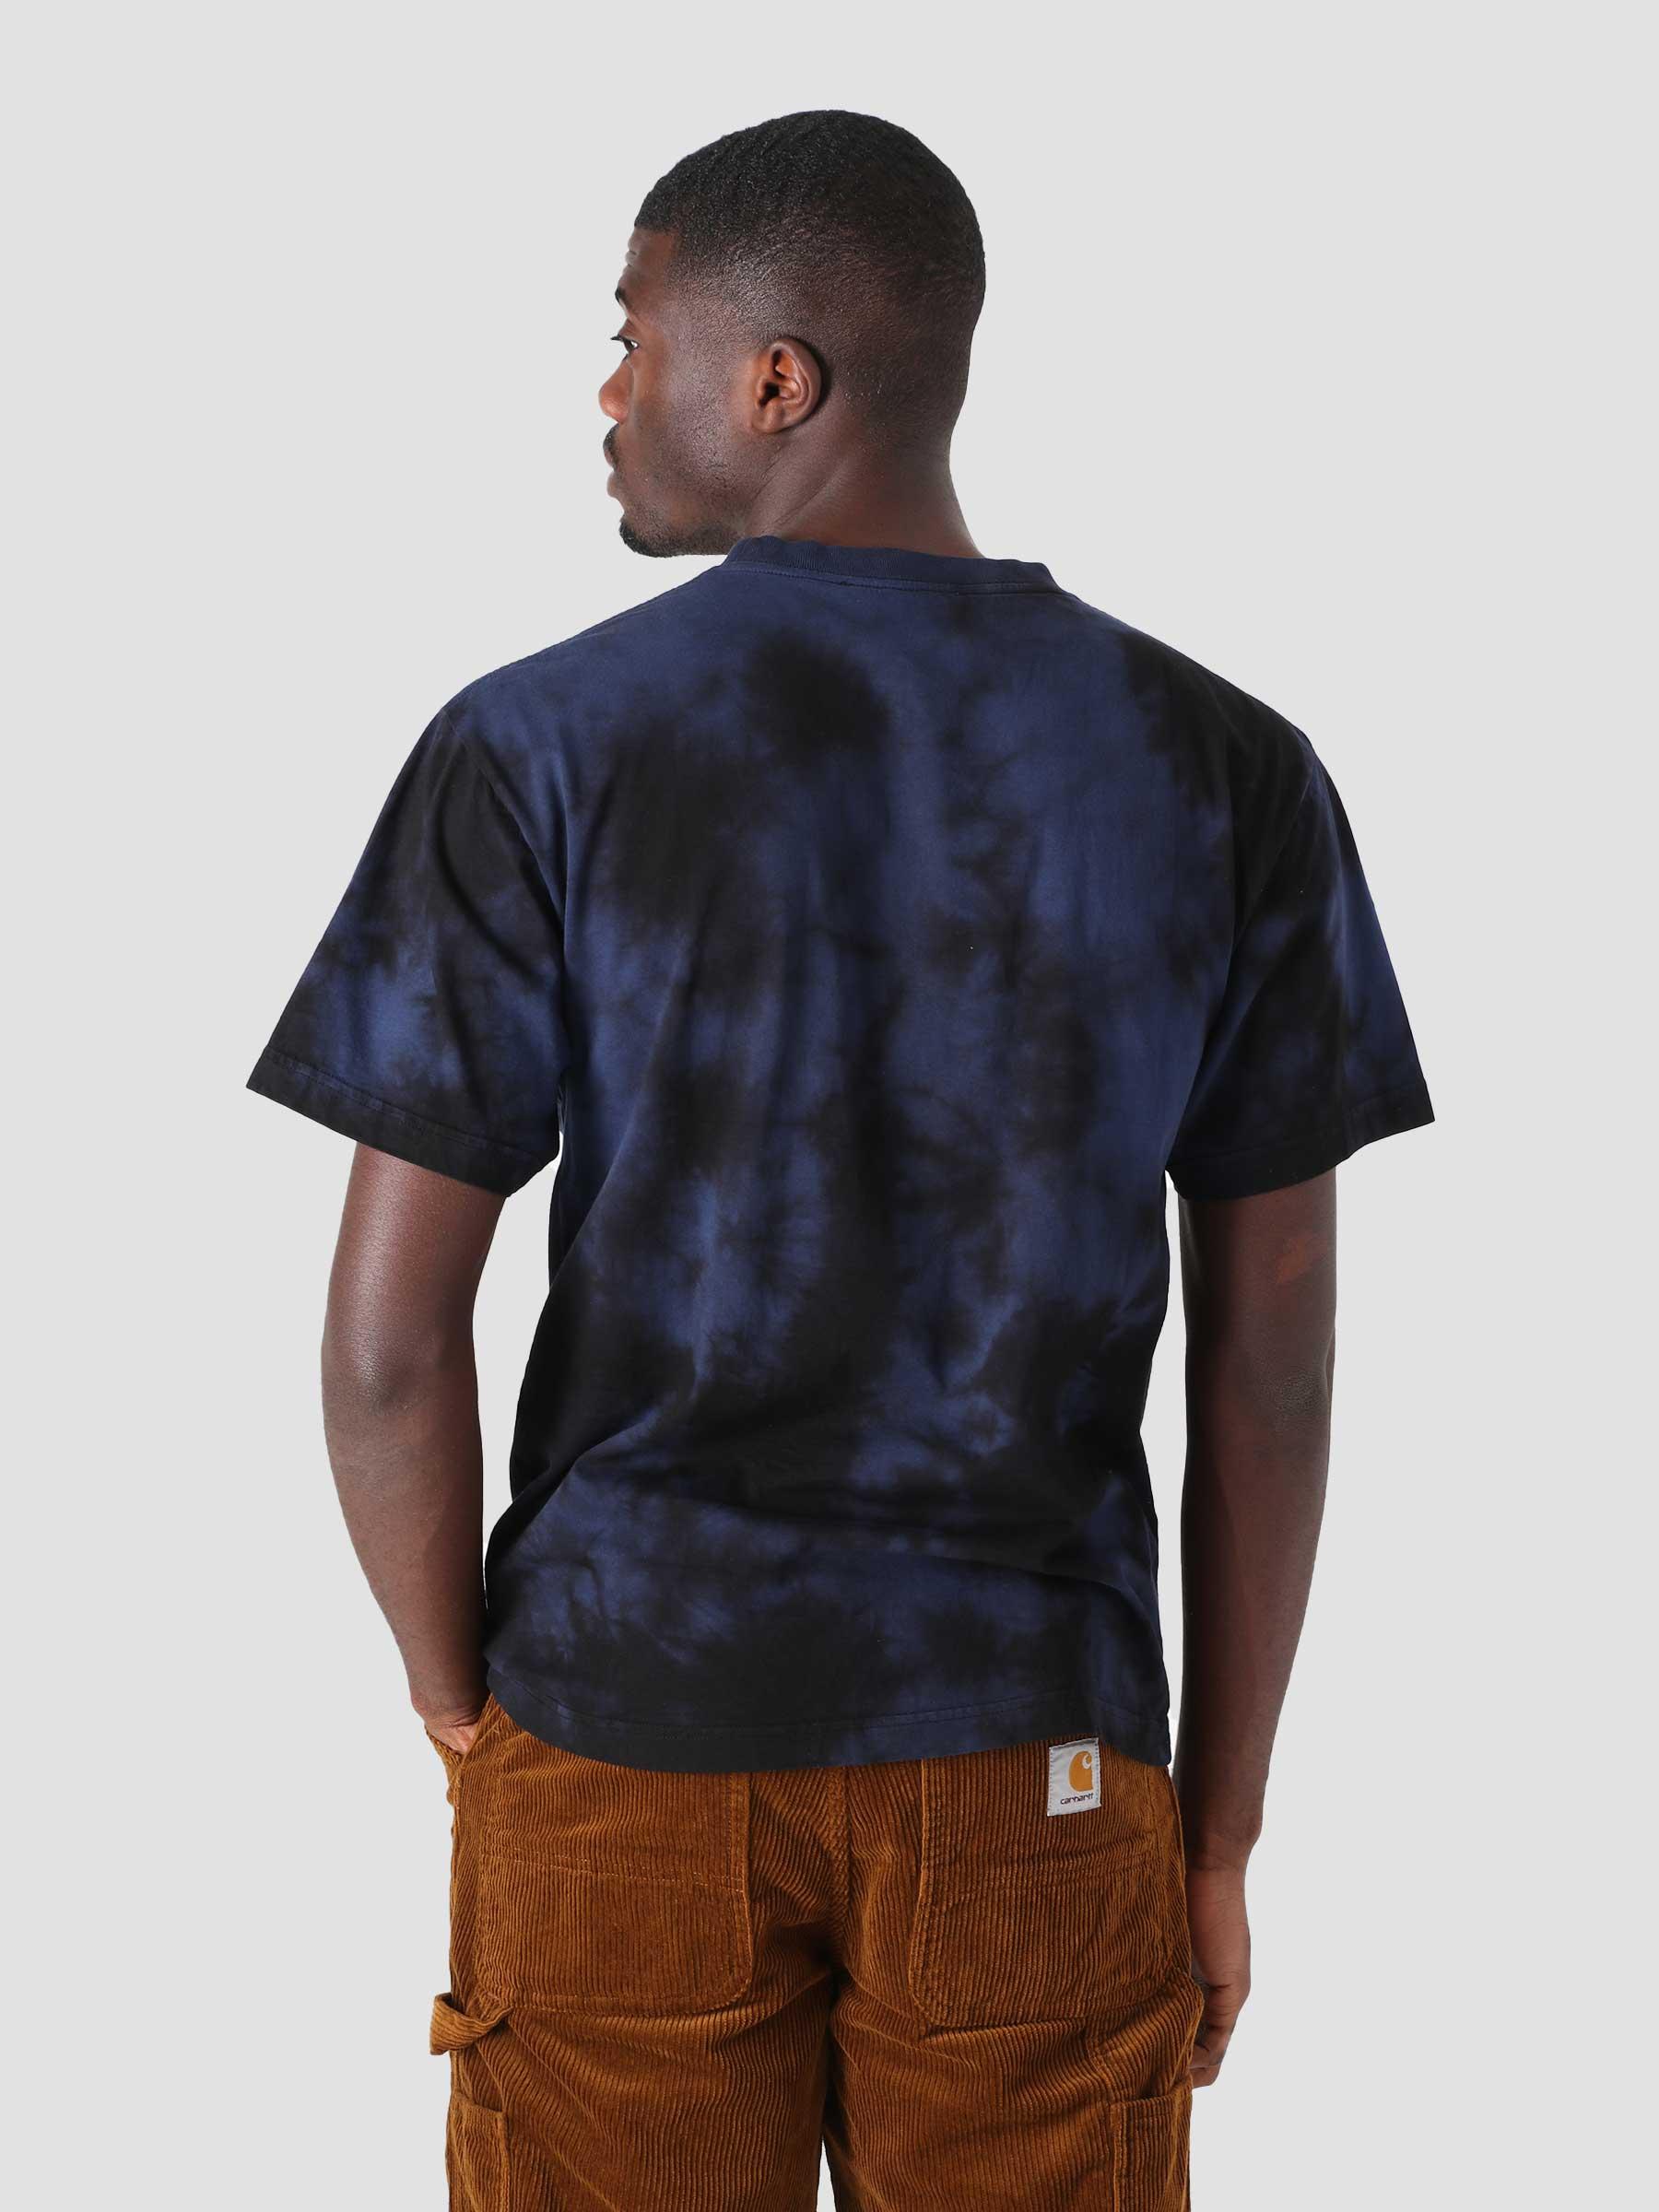 OLAF Tie Dye Block T-Shirt Black Blue